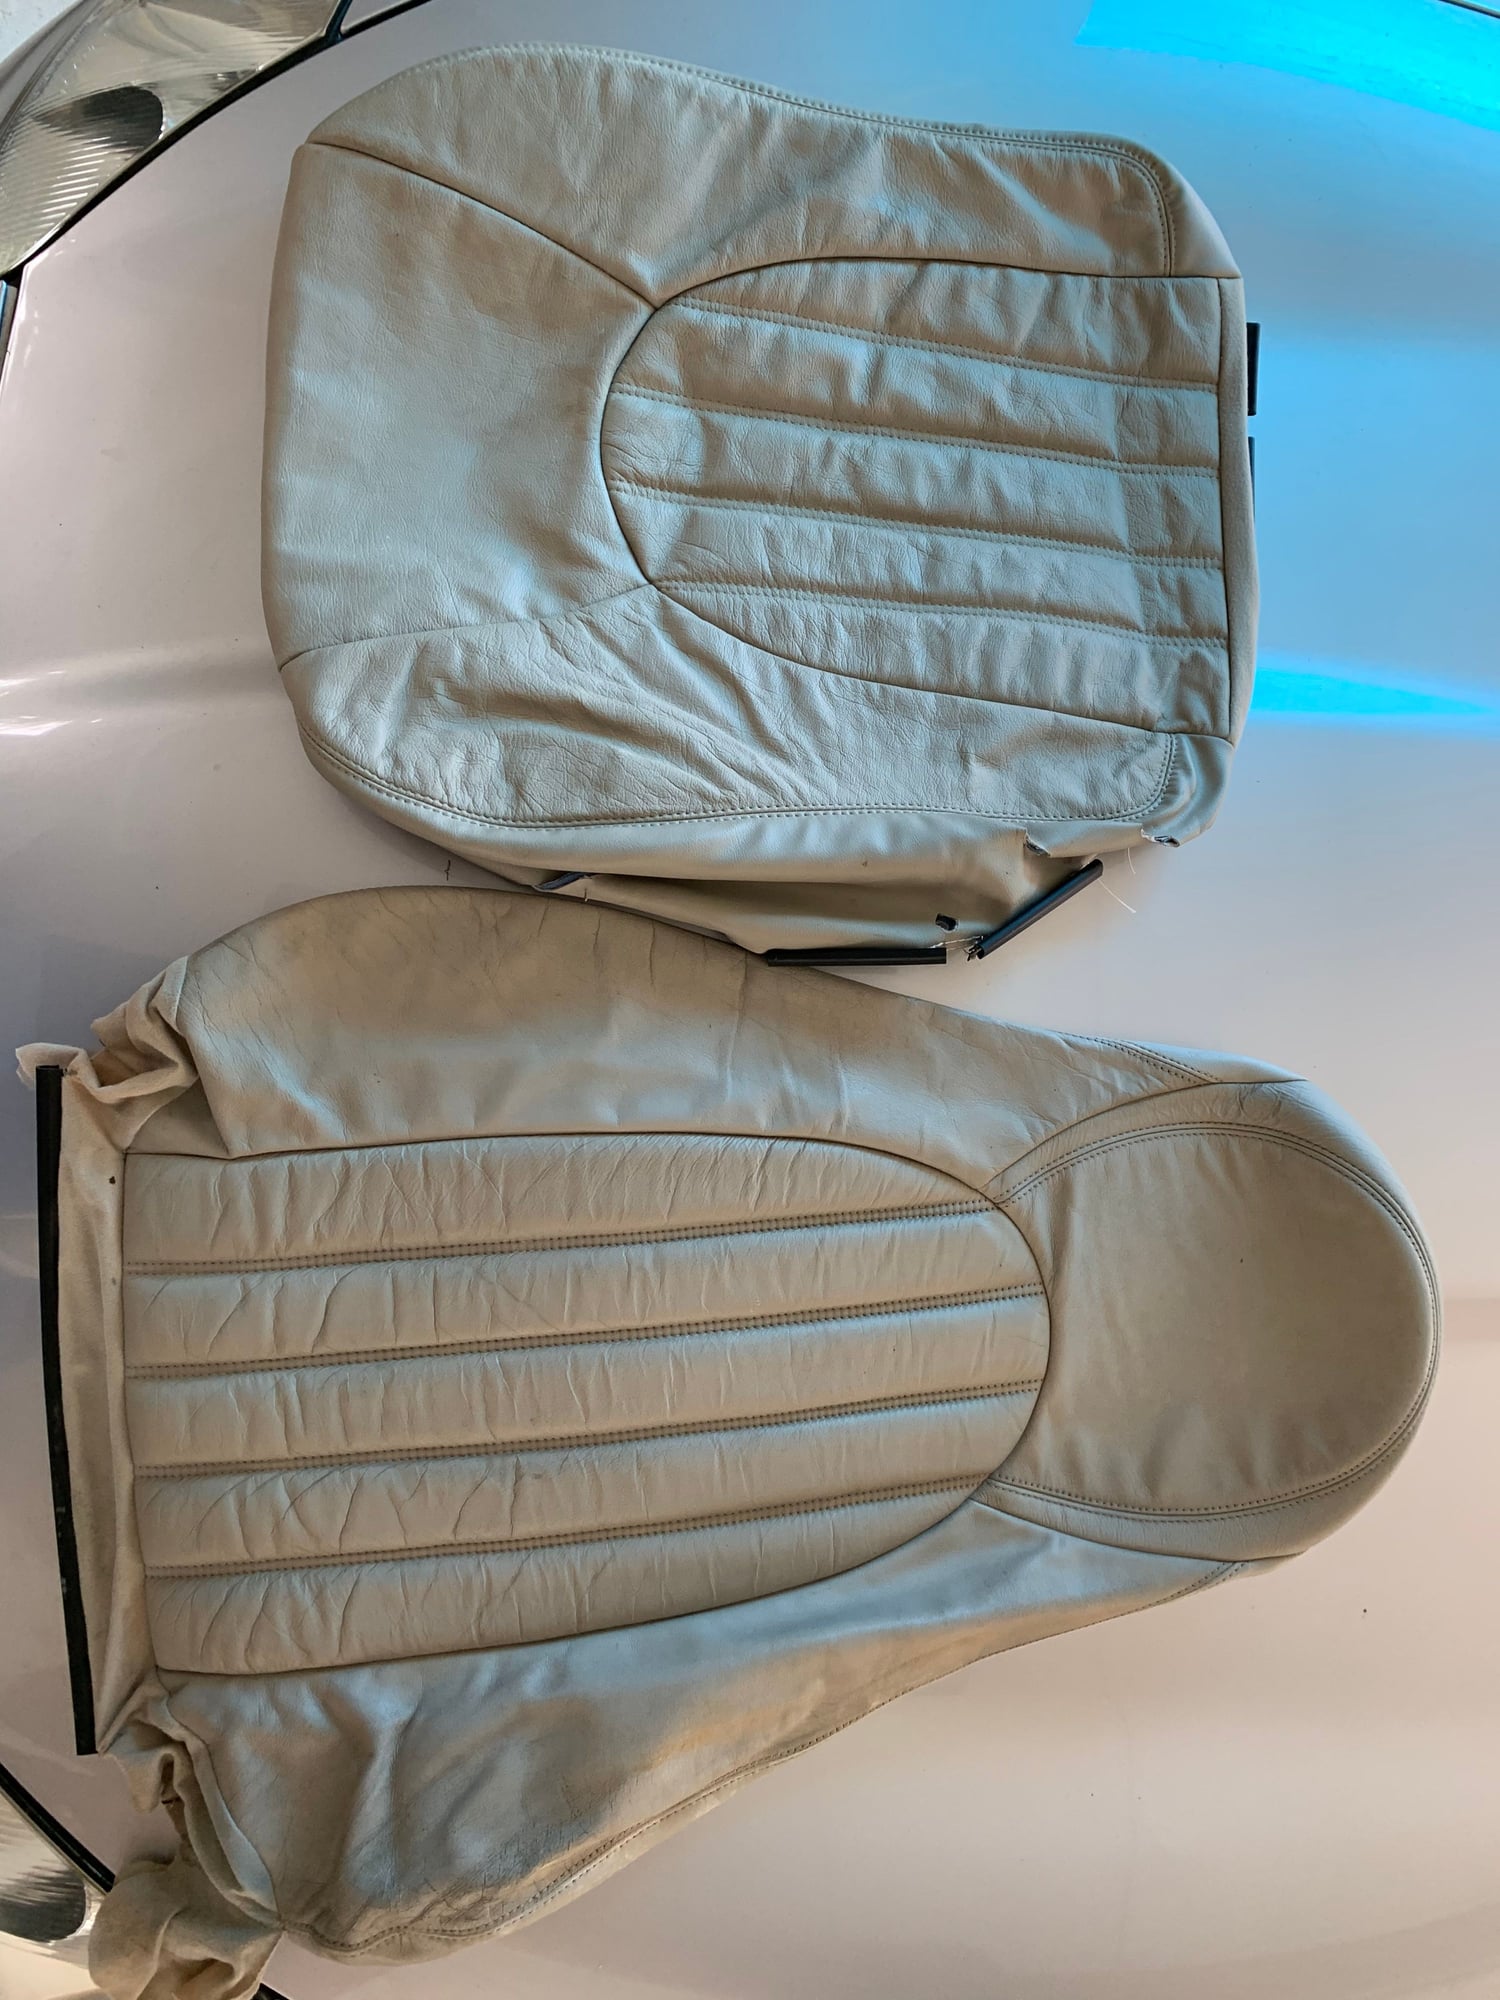 Interior/Upholstery - Front seats-leather/vinyl AGD - Used - 1997 to 2001 Jaguar XK8 - Orange Beach, AL 36561, United States